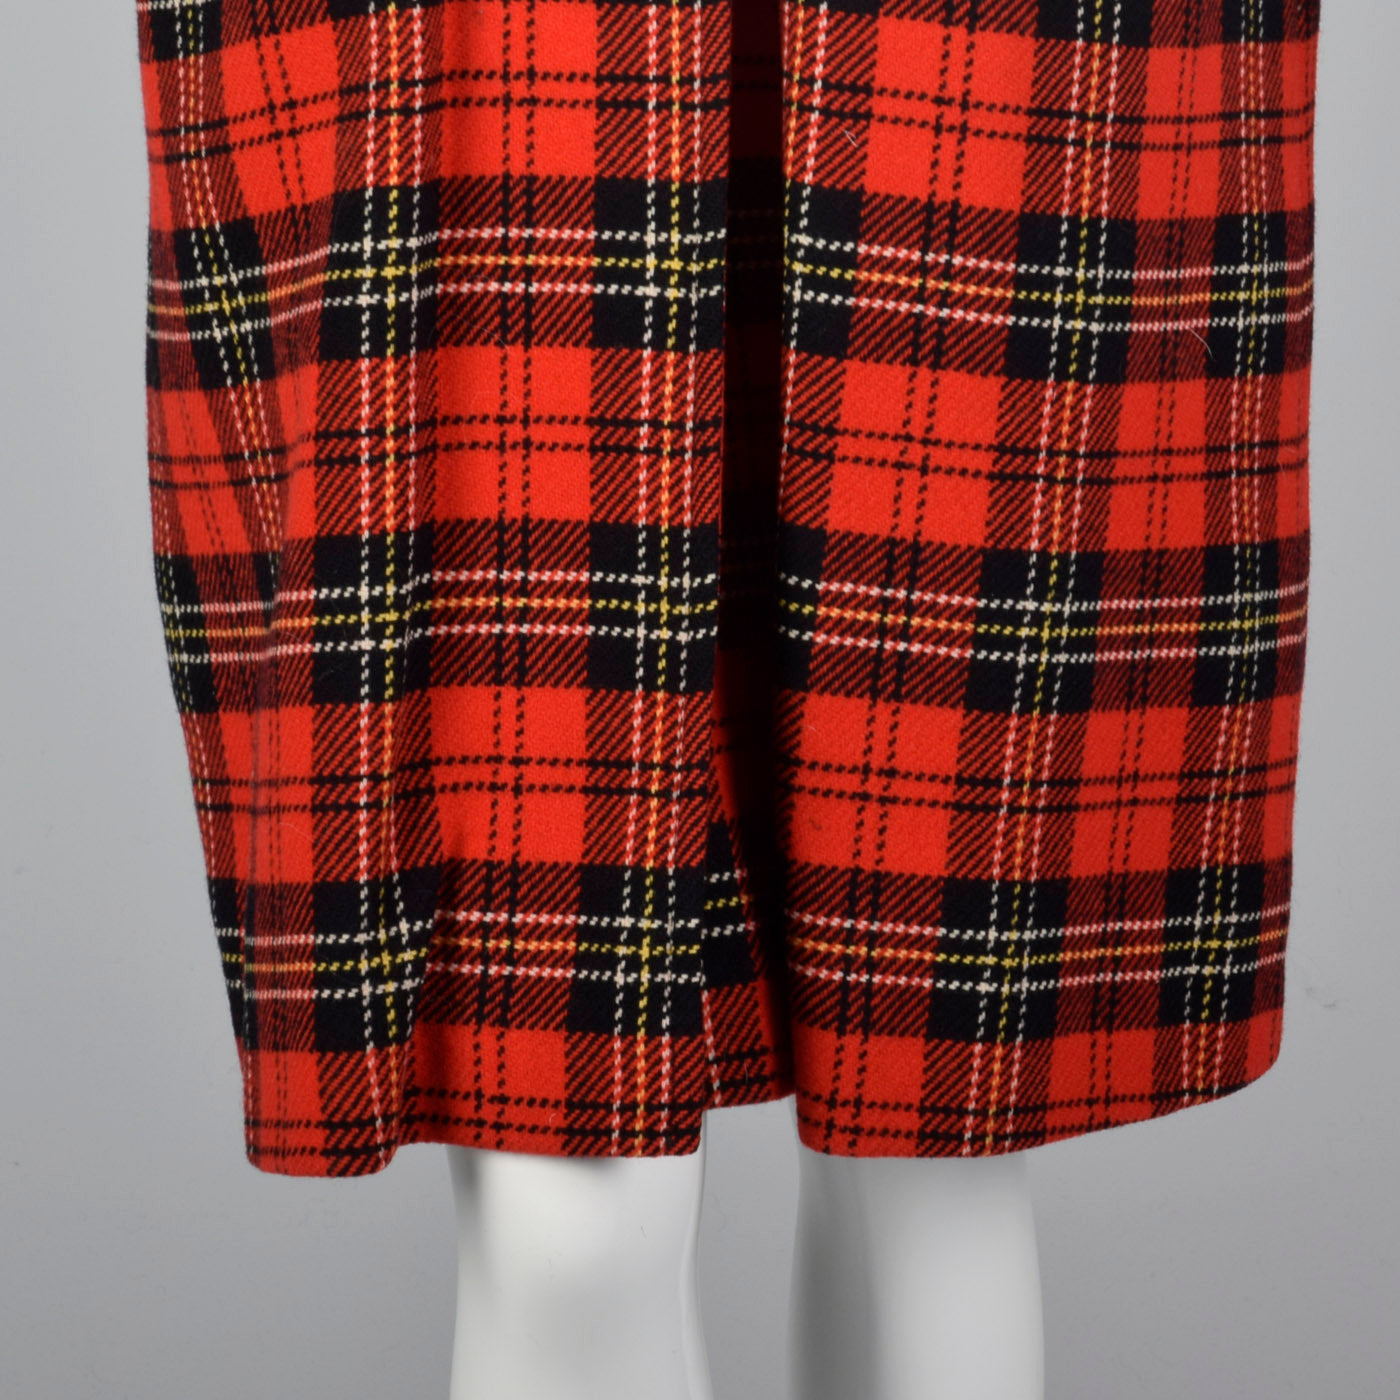 1950s Pendleton Bright Red Tartan Plaid Coat